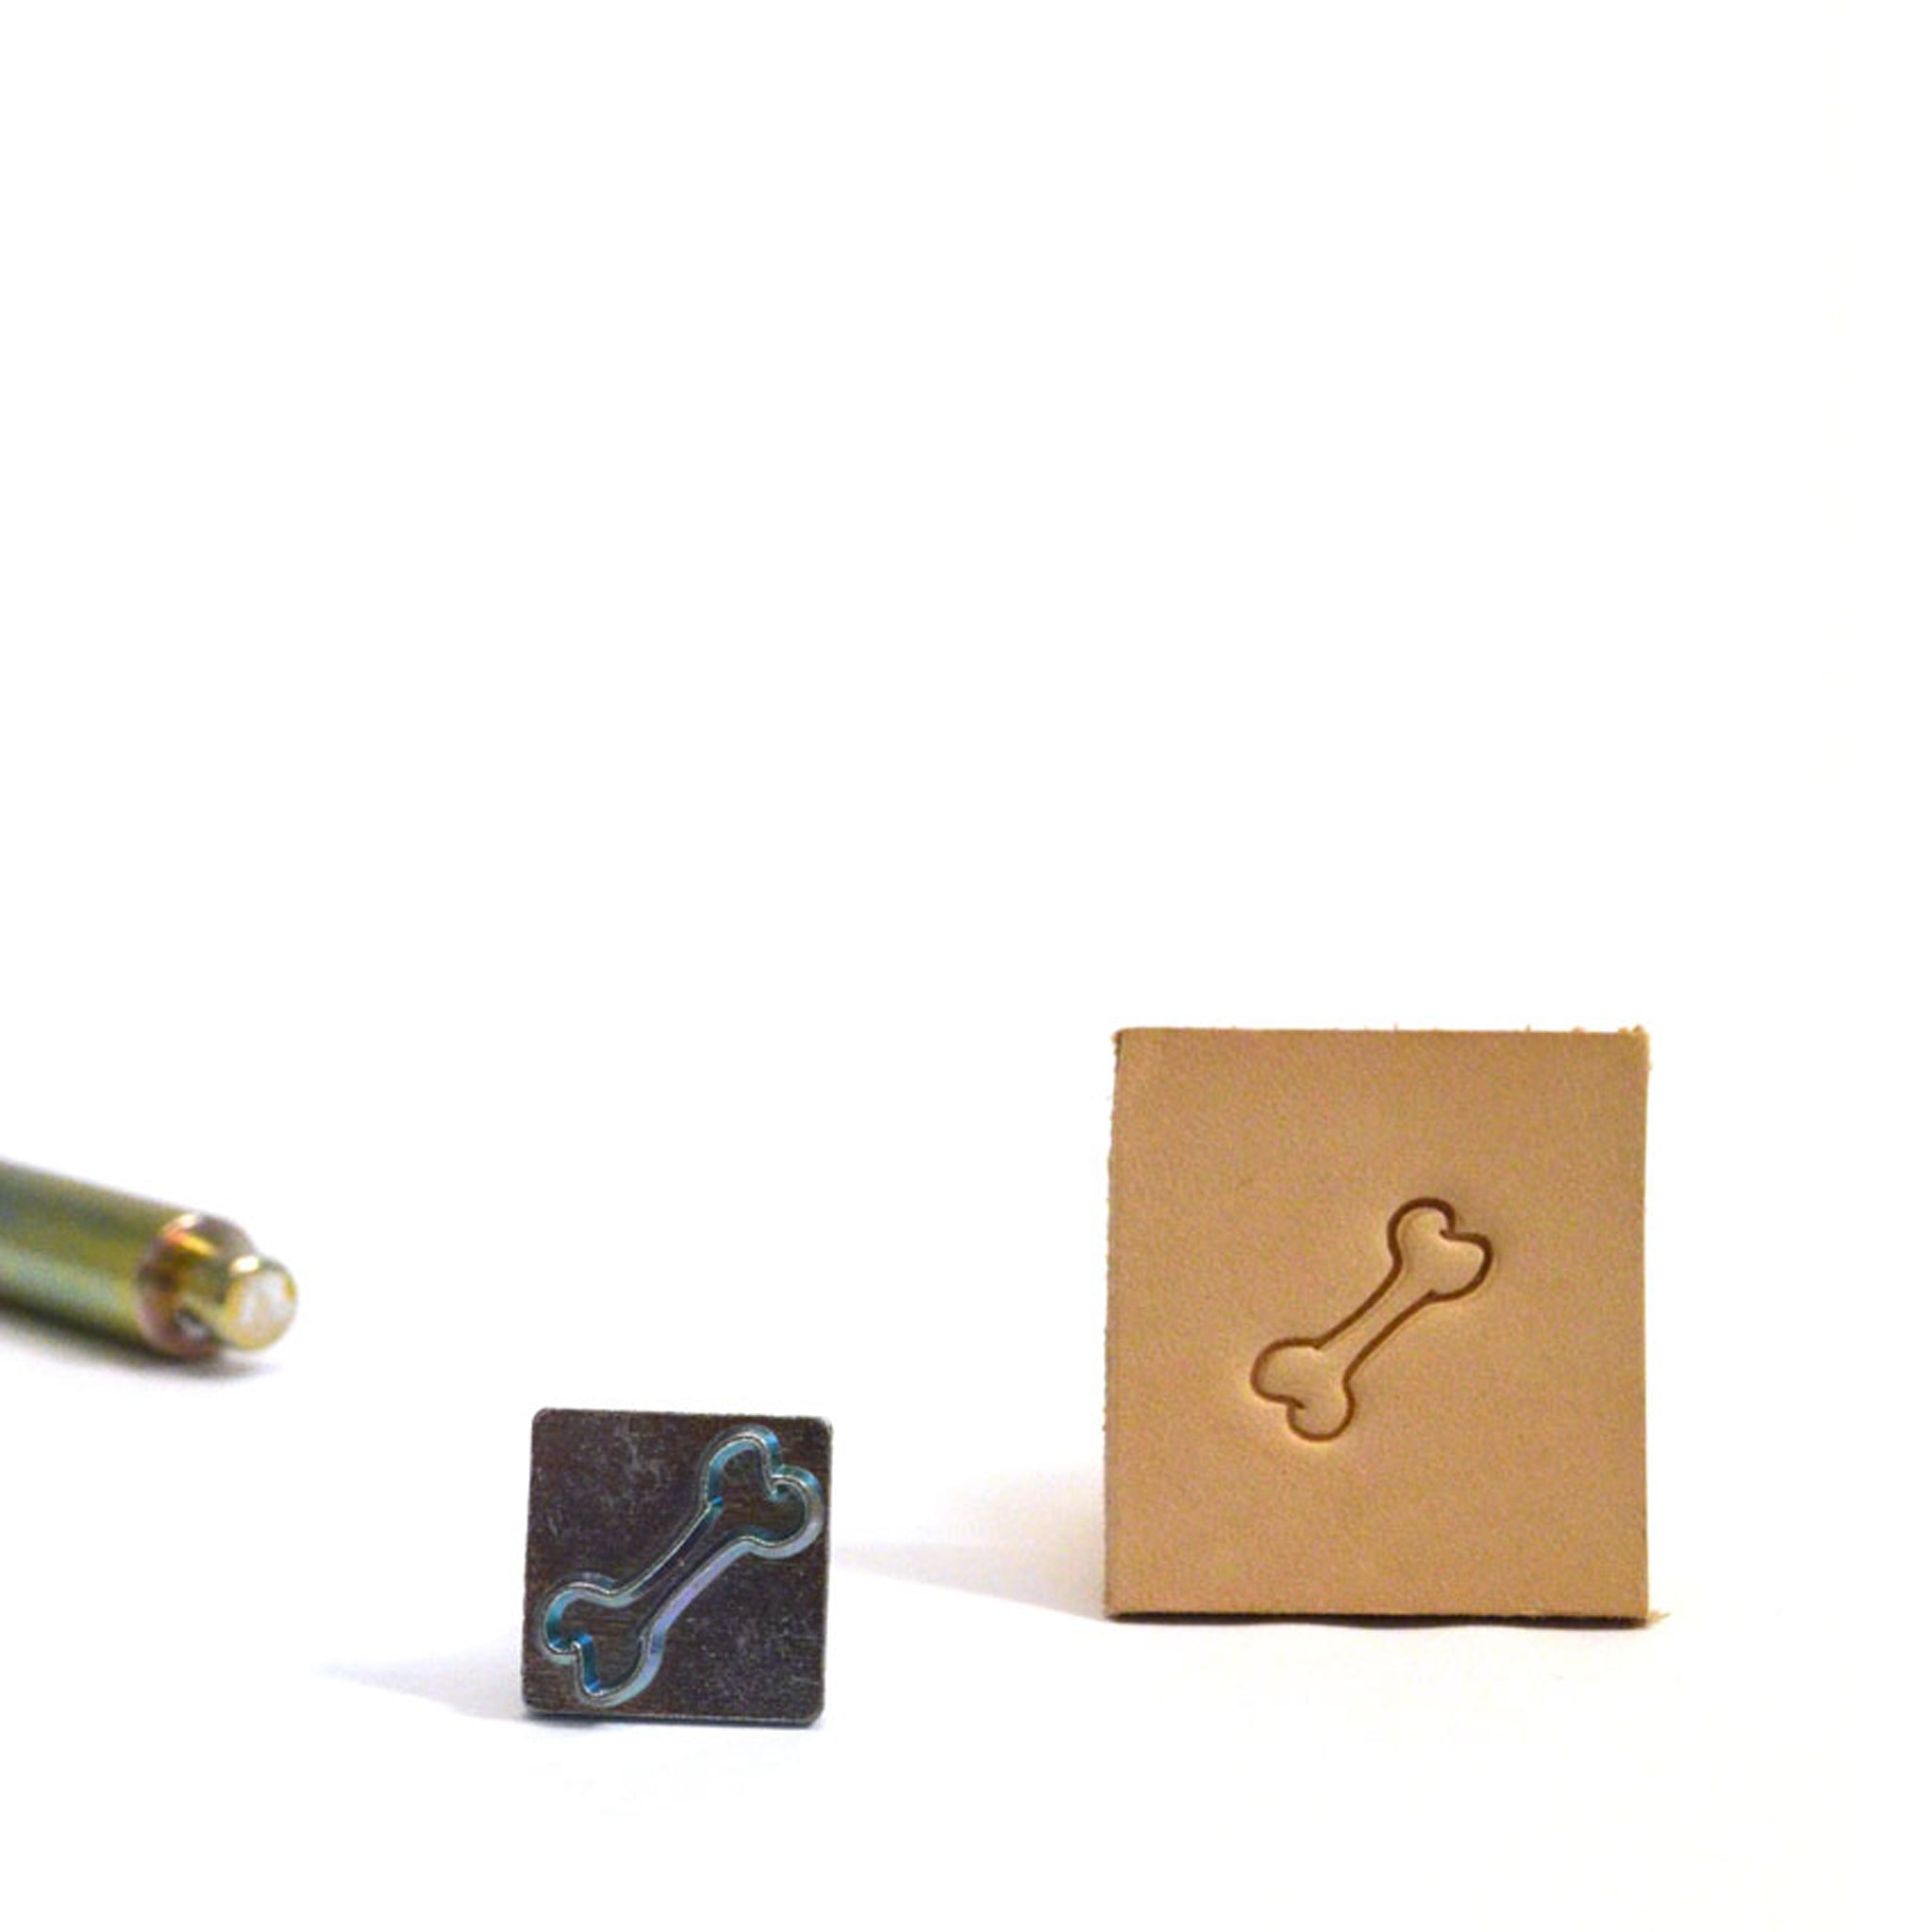 Dog Bone Mini 3D Embossing Stamp from Identity Leathercraft